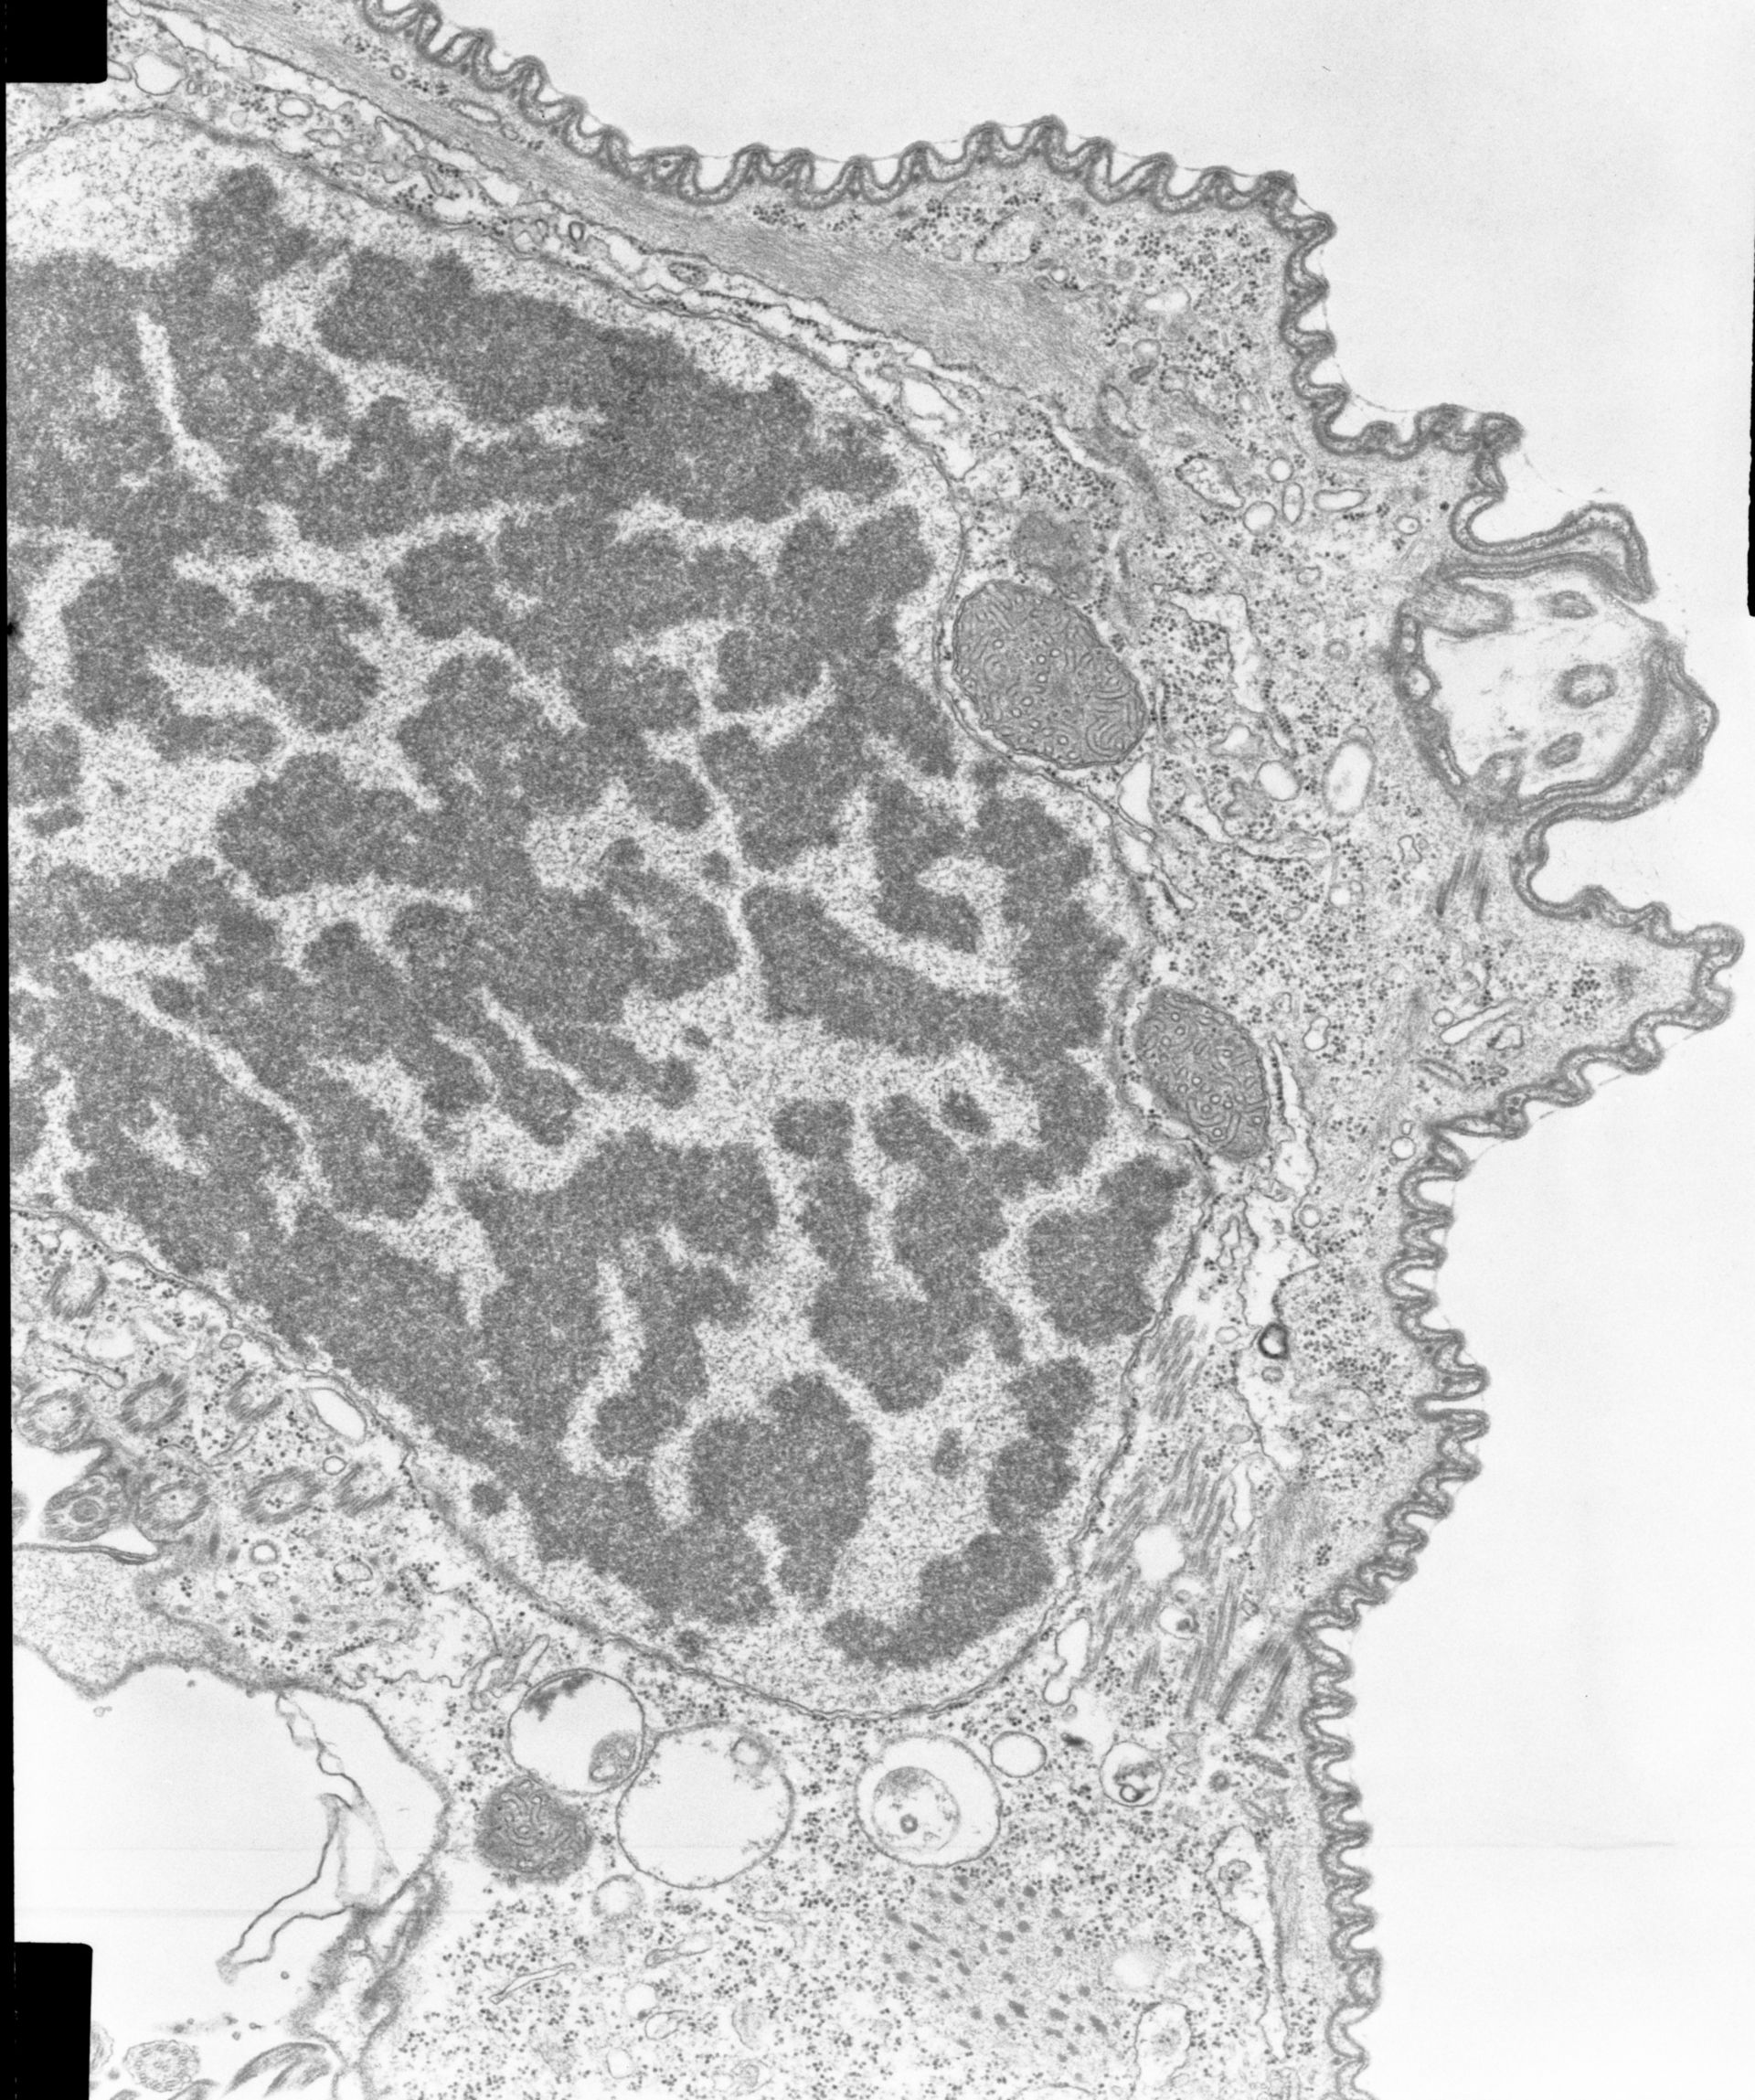 Opercularia coarctata (Microtubule basal body) - CIL:7333